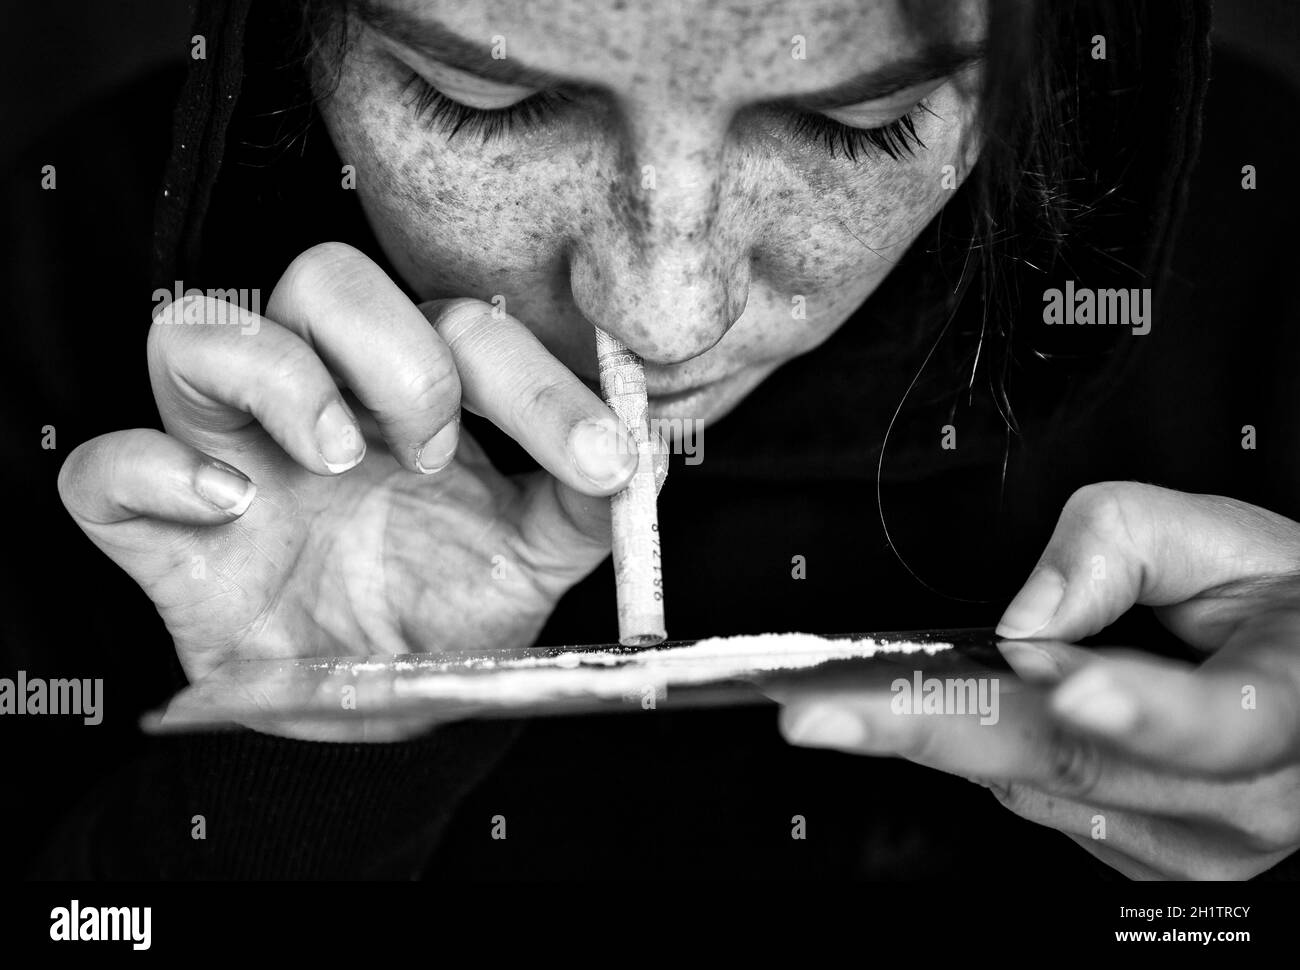 Drug addict Black and White Stock Photos & Images - Alamy